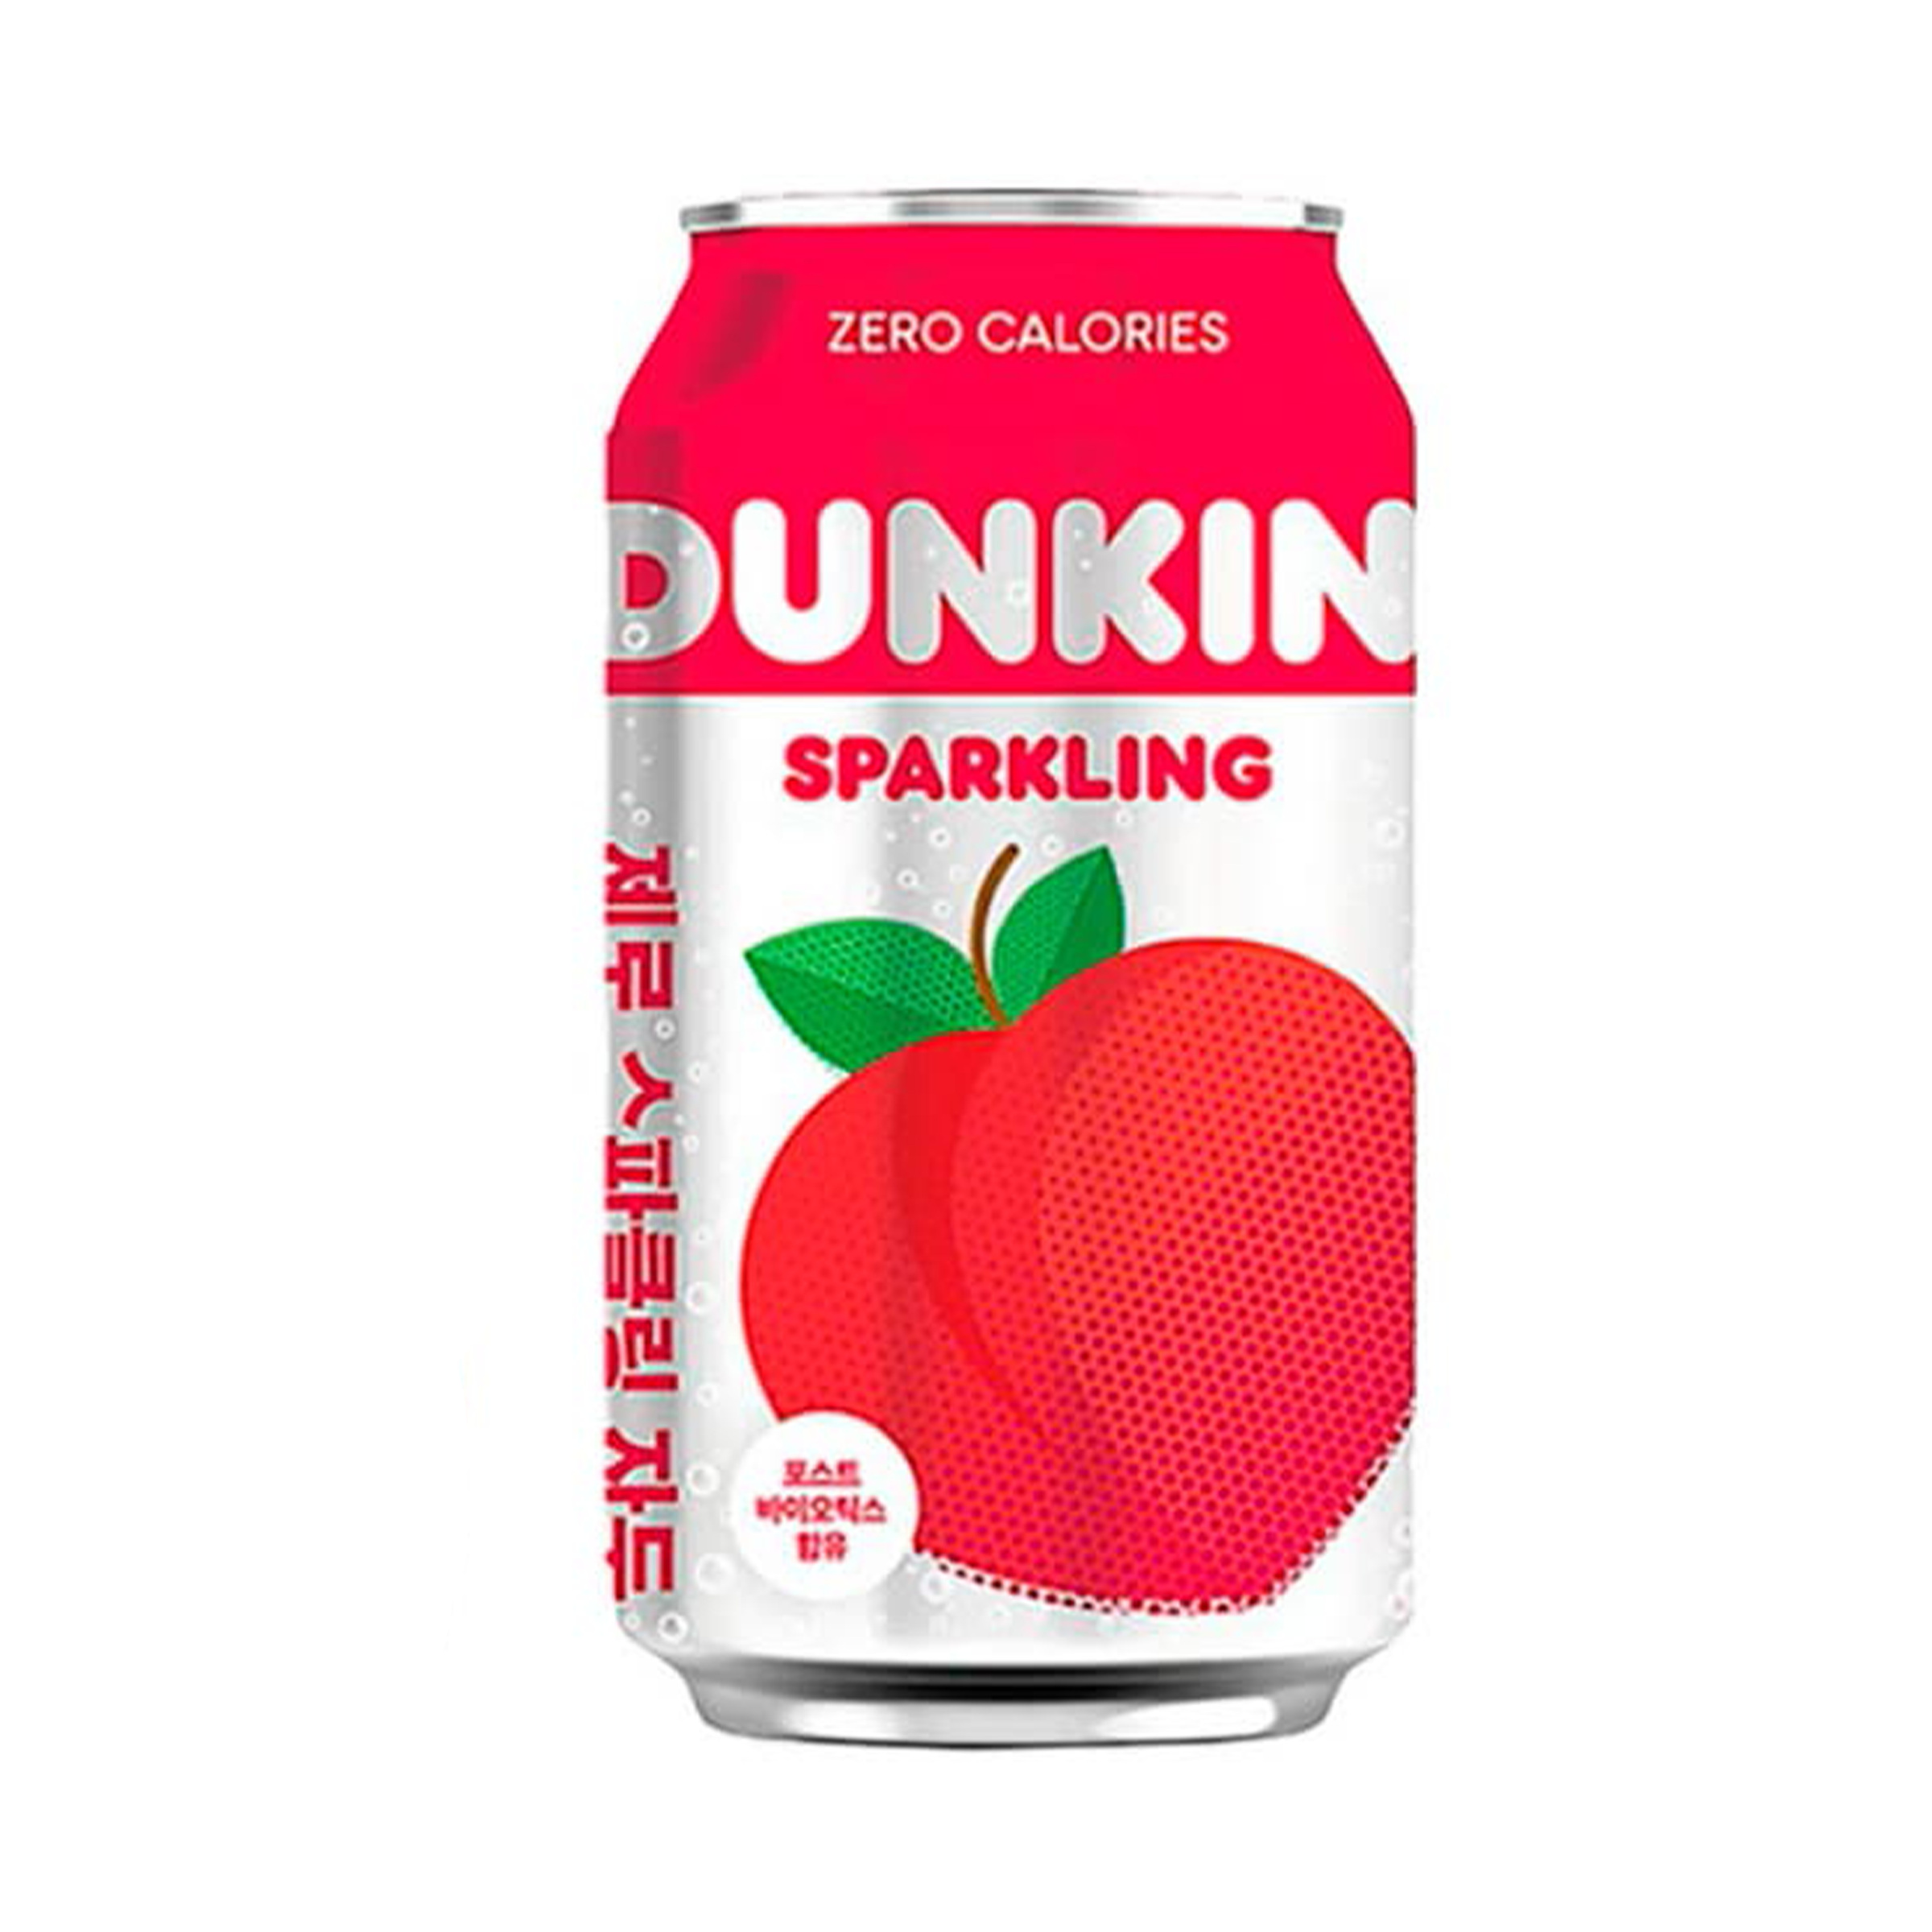 Dunkin Sparkling Drink - Peach (Korea)